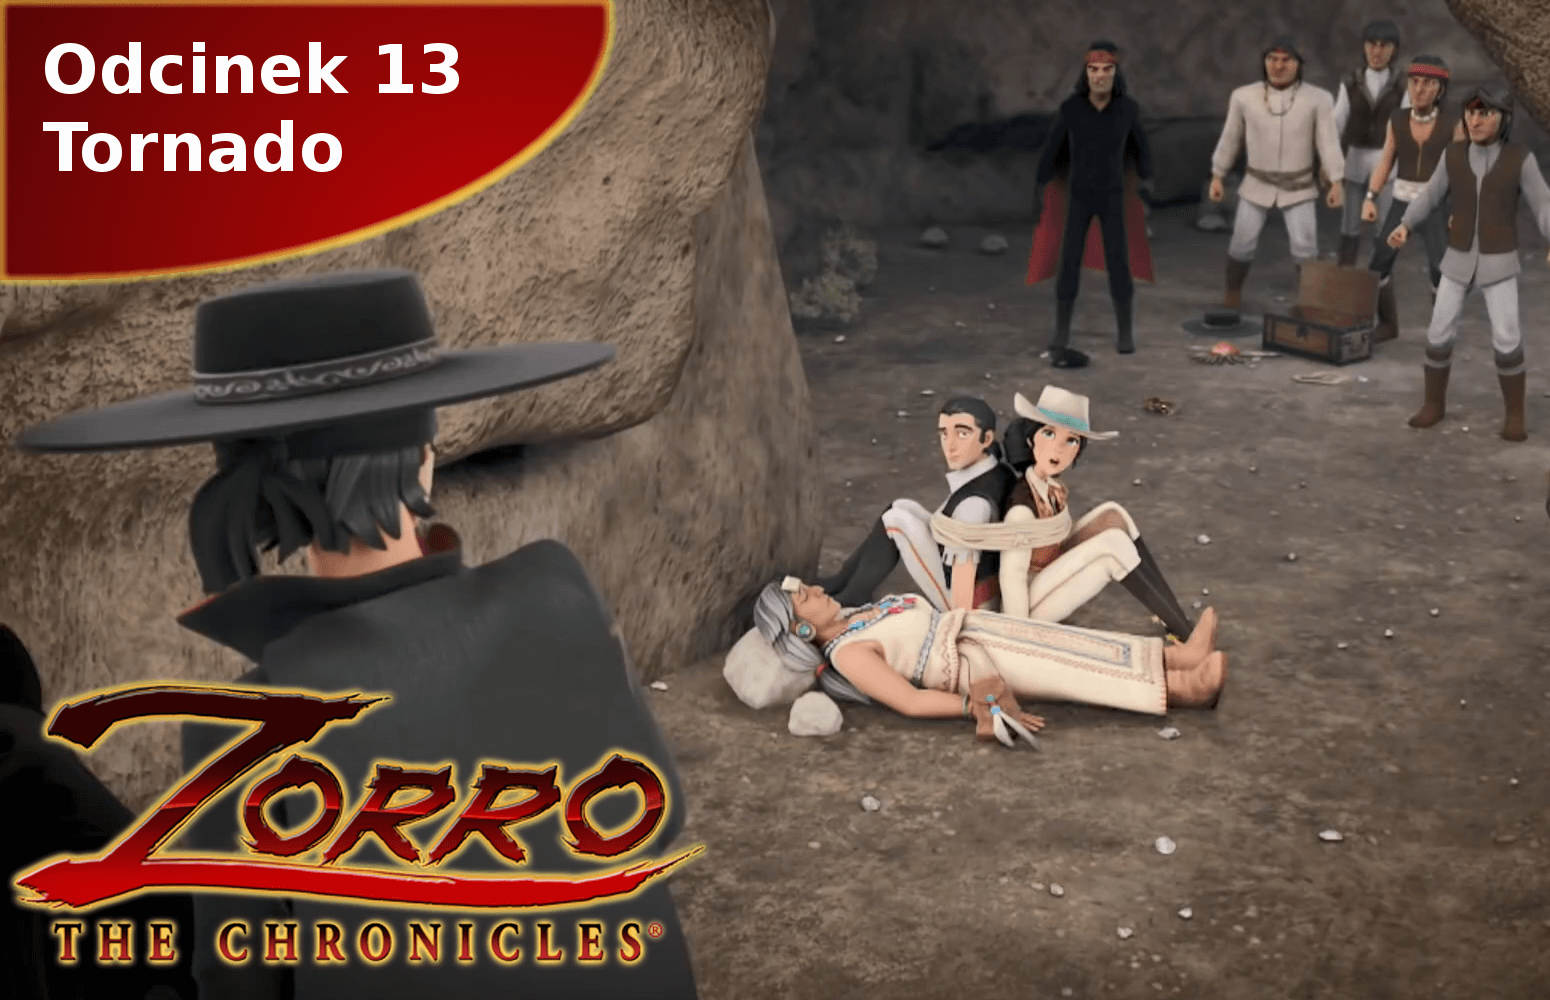 Kroniki Zorro odcinek 13 Tornado